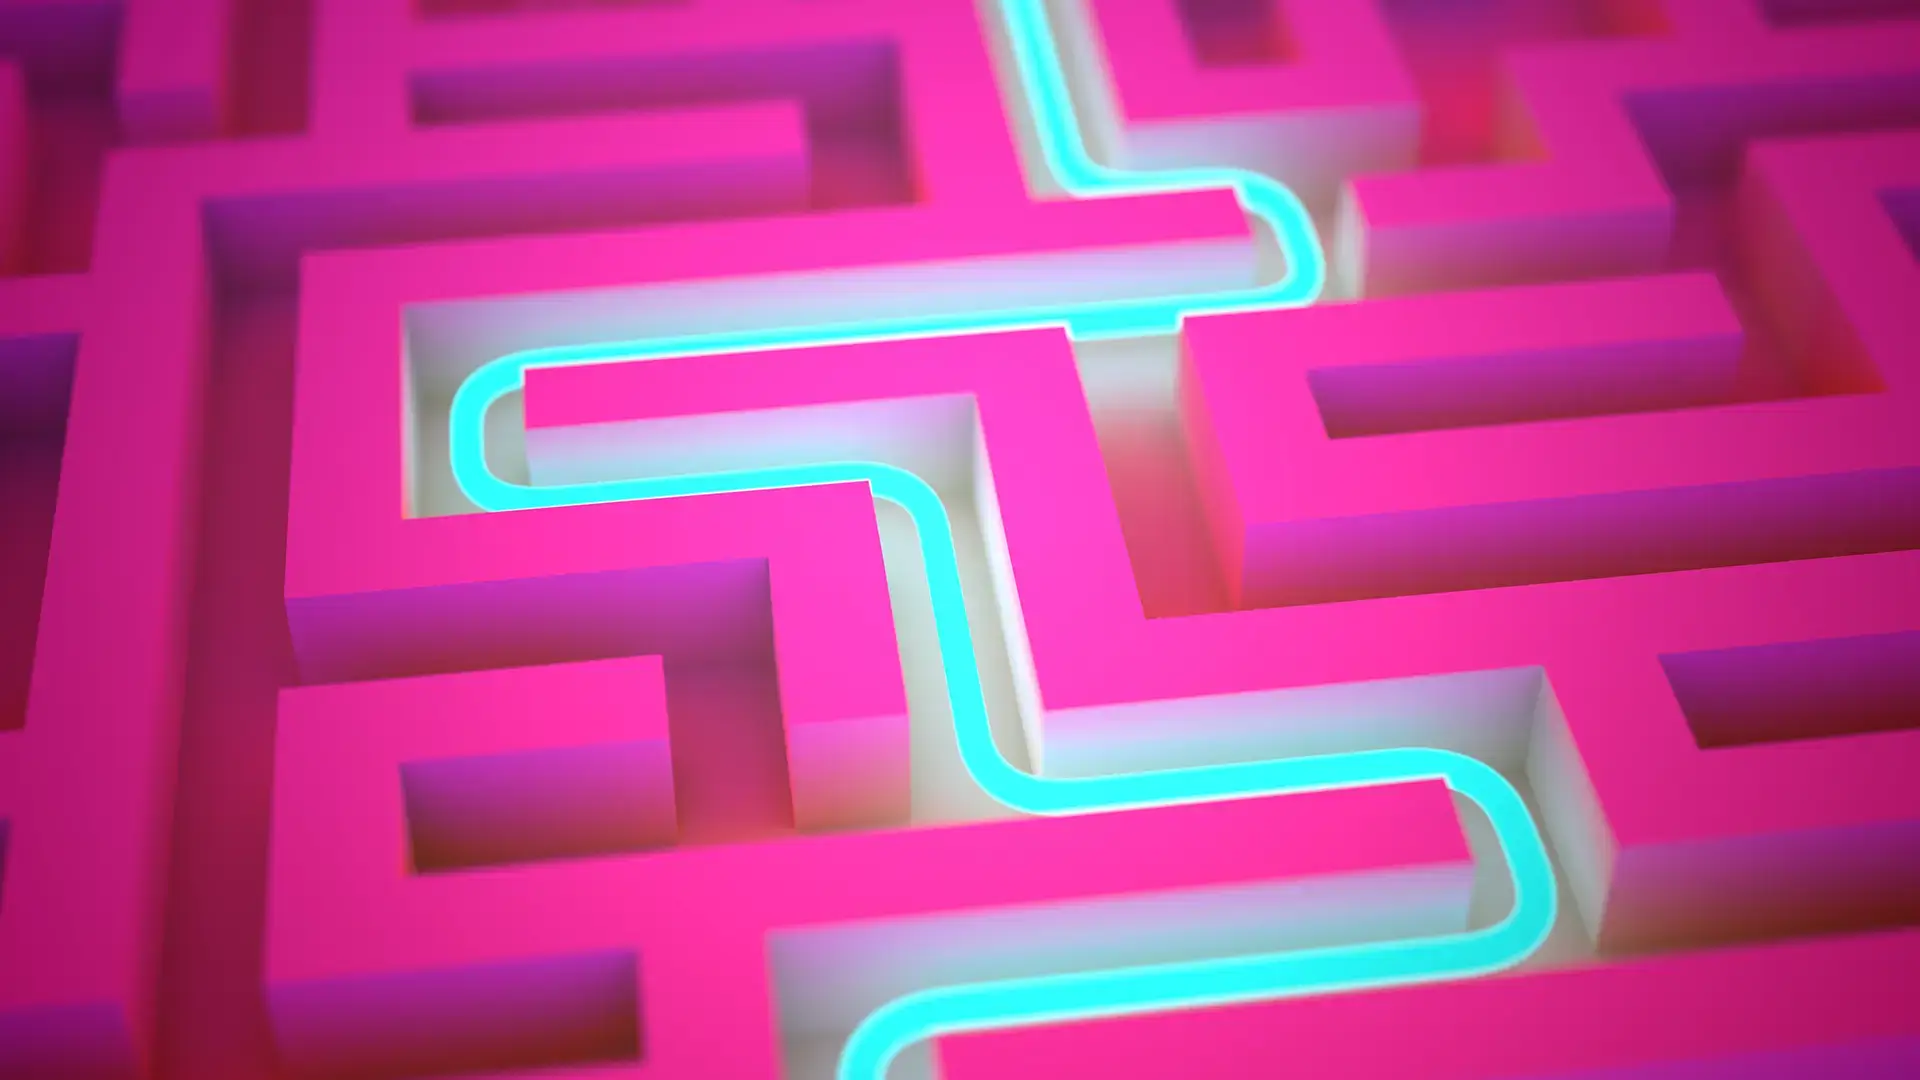 Blue neon path across endless pink 3D labyrinth.